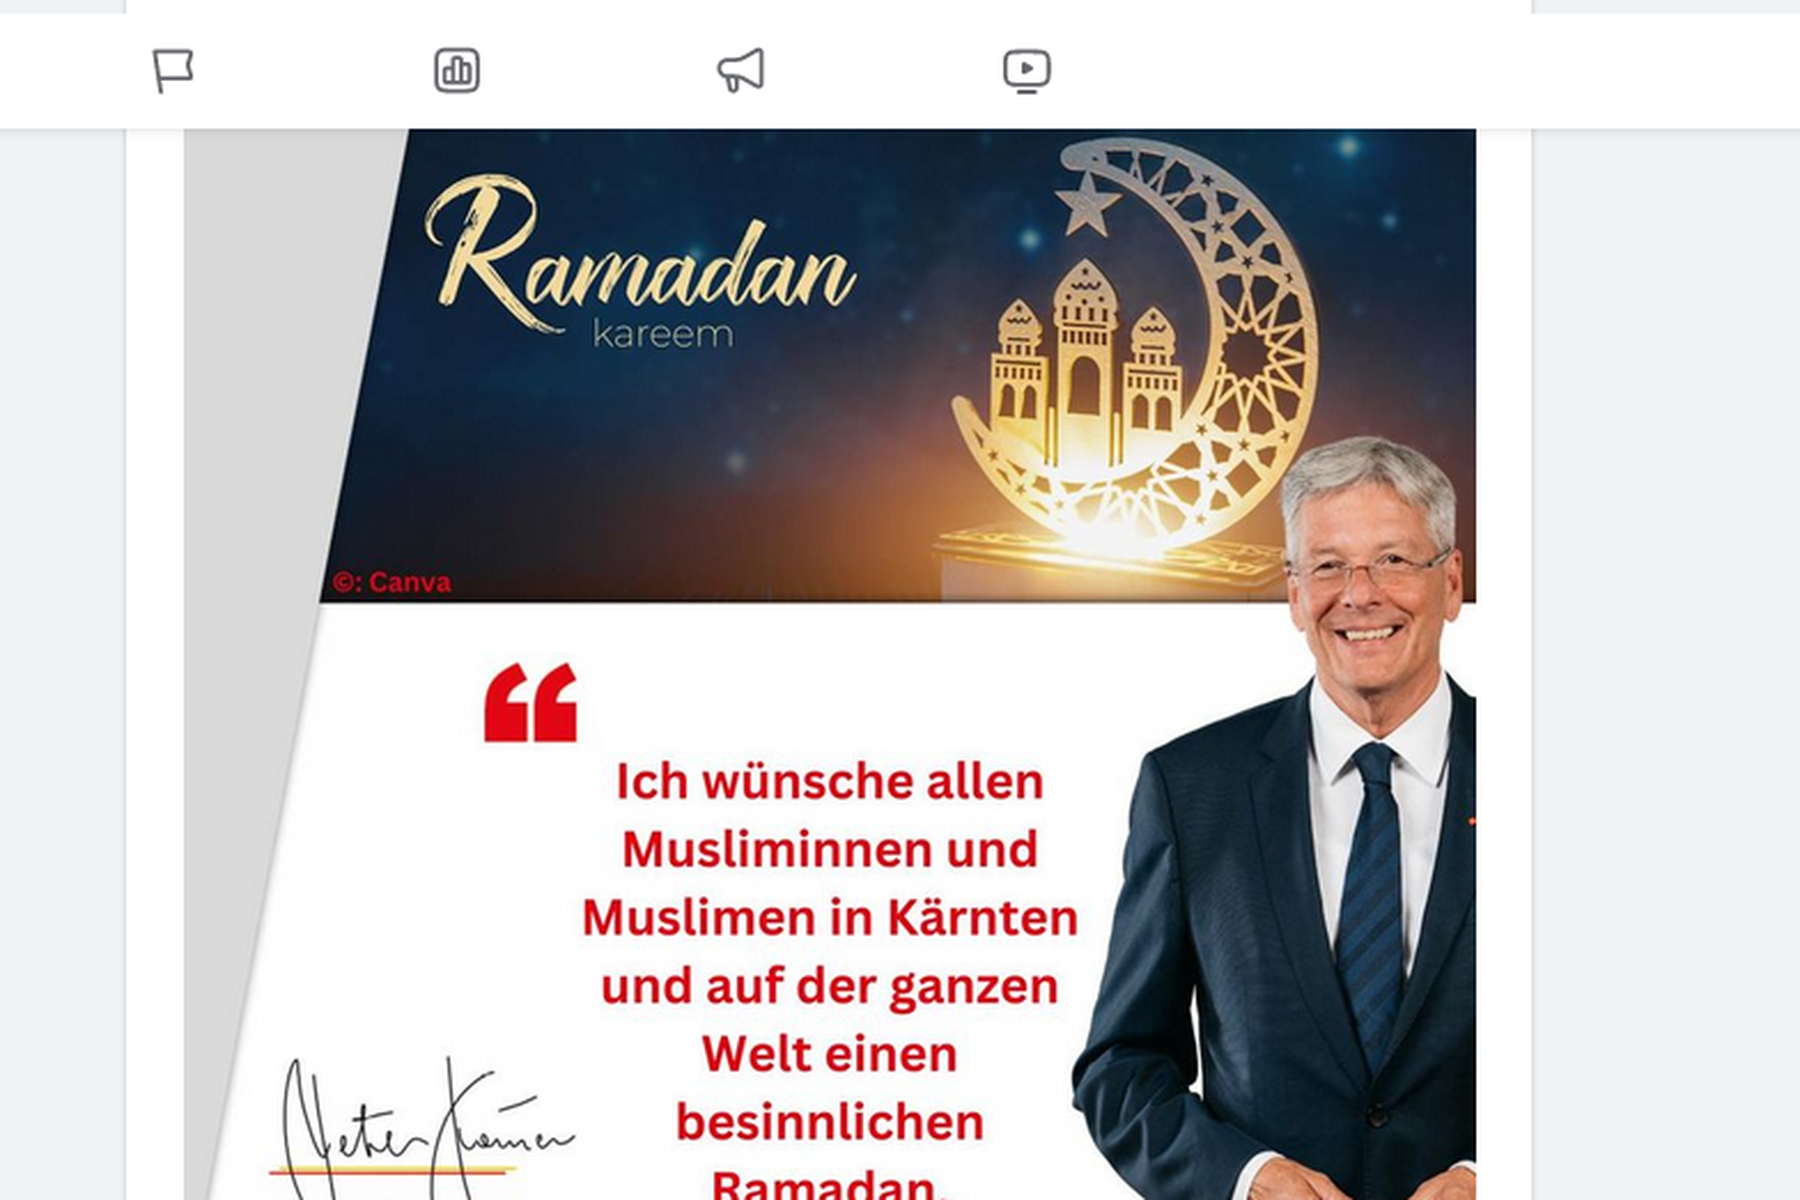 Heftige Reaktionen: Nach Ramadan-Posting: Shitstorm trifft Kärntner Landeshauptmann 